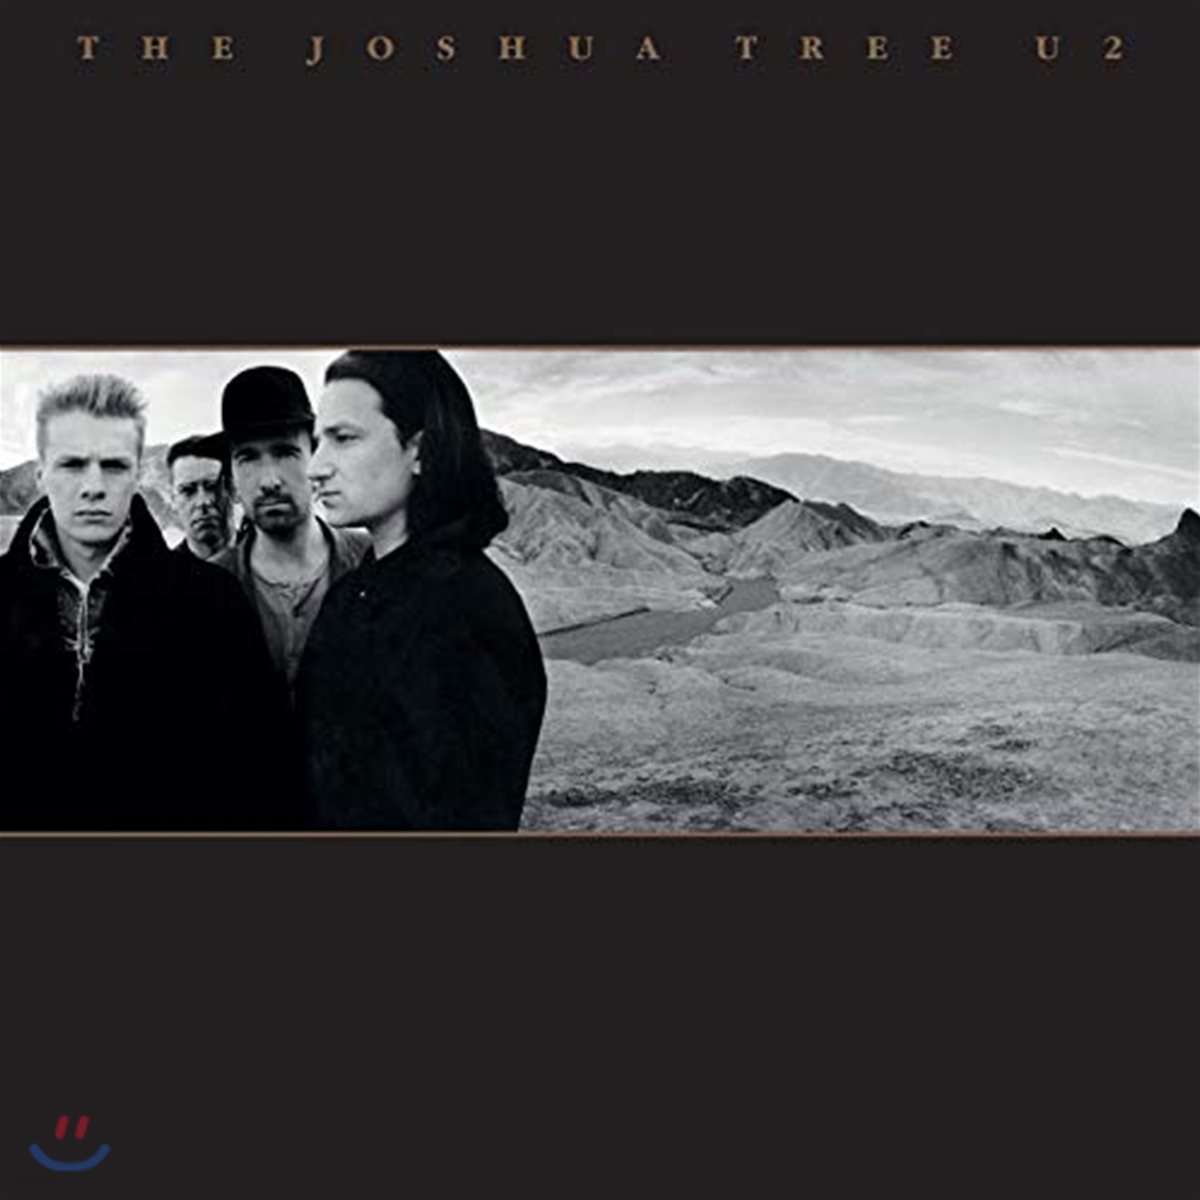 U2 (유투) - The Joshua Tree [골드 컬러 2LP]